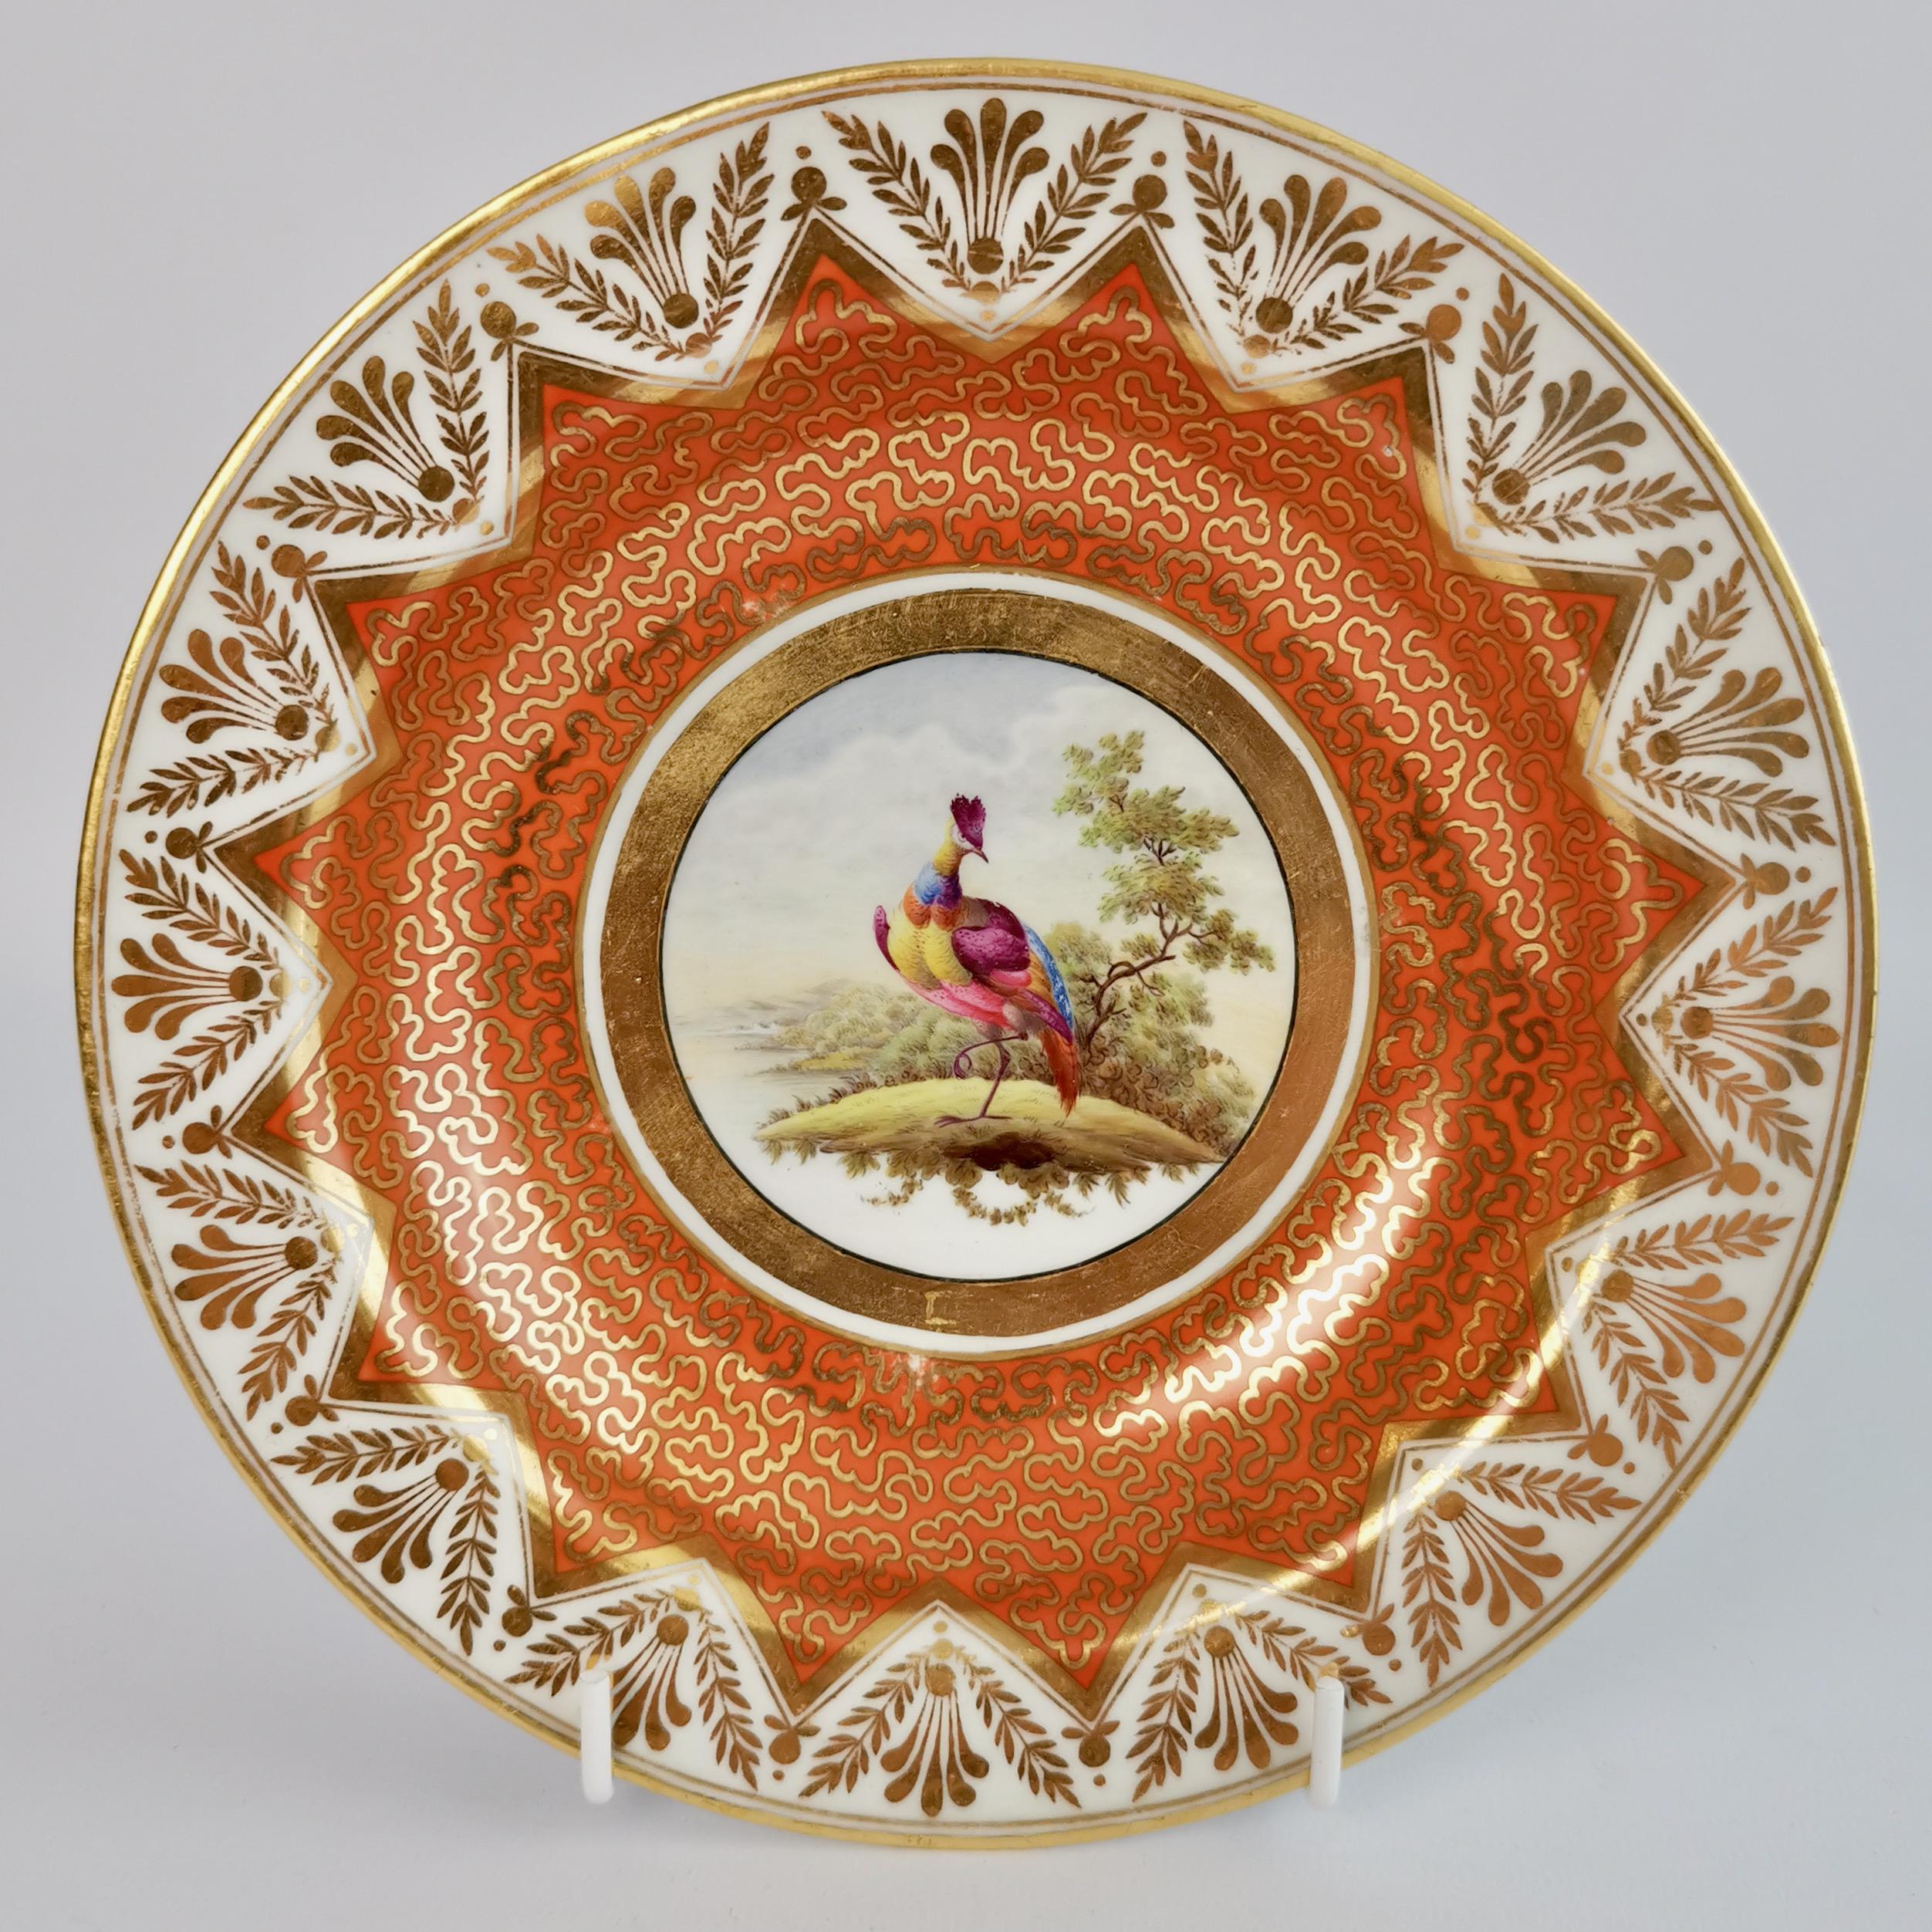 Chamberlains Worcester Porcelain Dessert Service, Orange, Regency, circa 1815 9